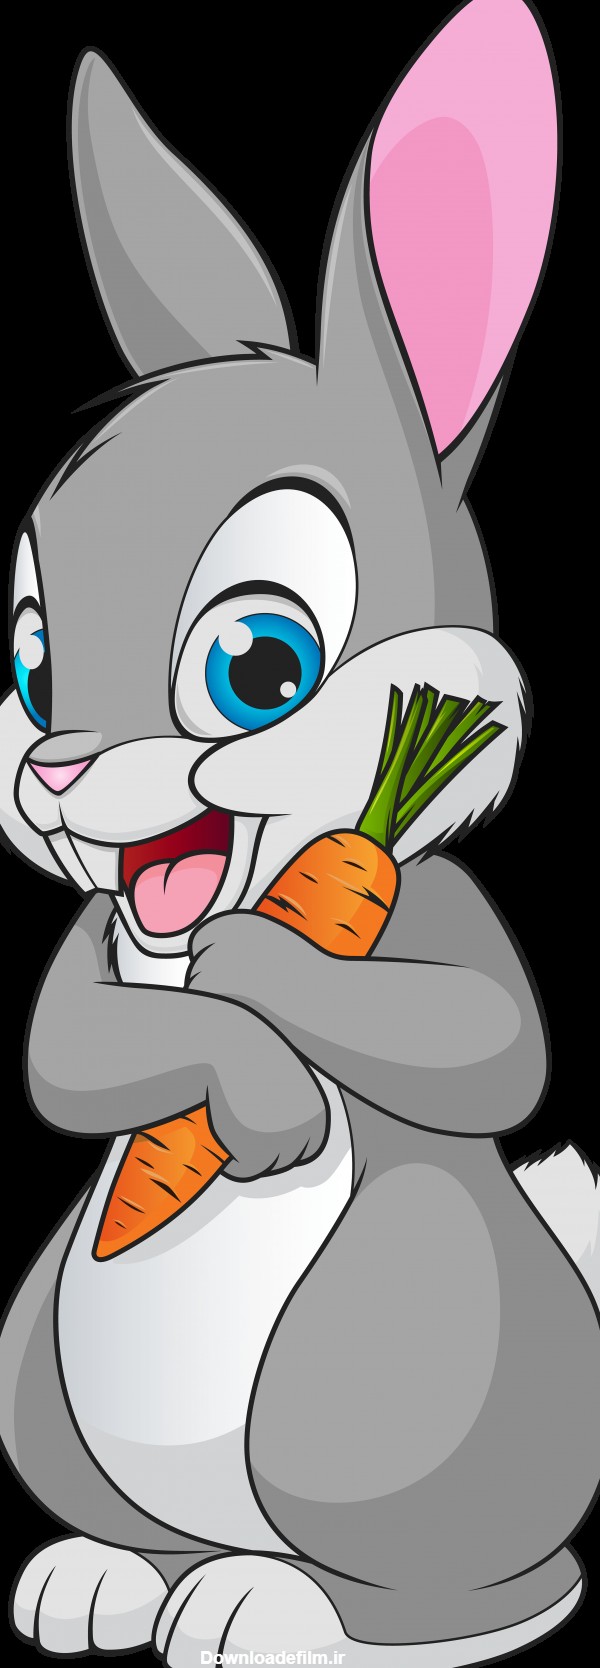 عکس PNG کارتونی خرگوش - Bunny PNG Cartoon – دانلود رایگان